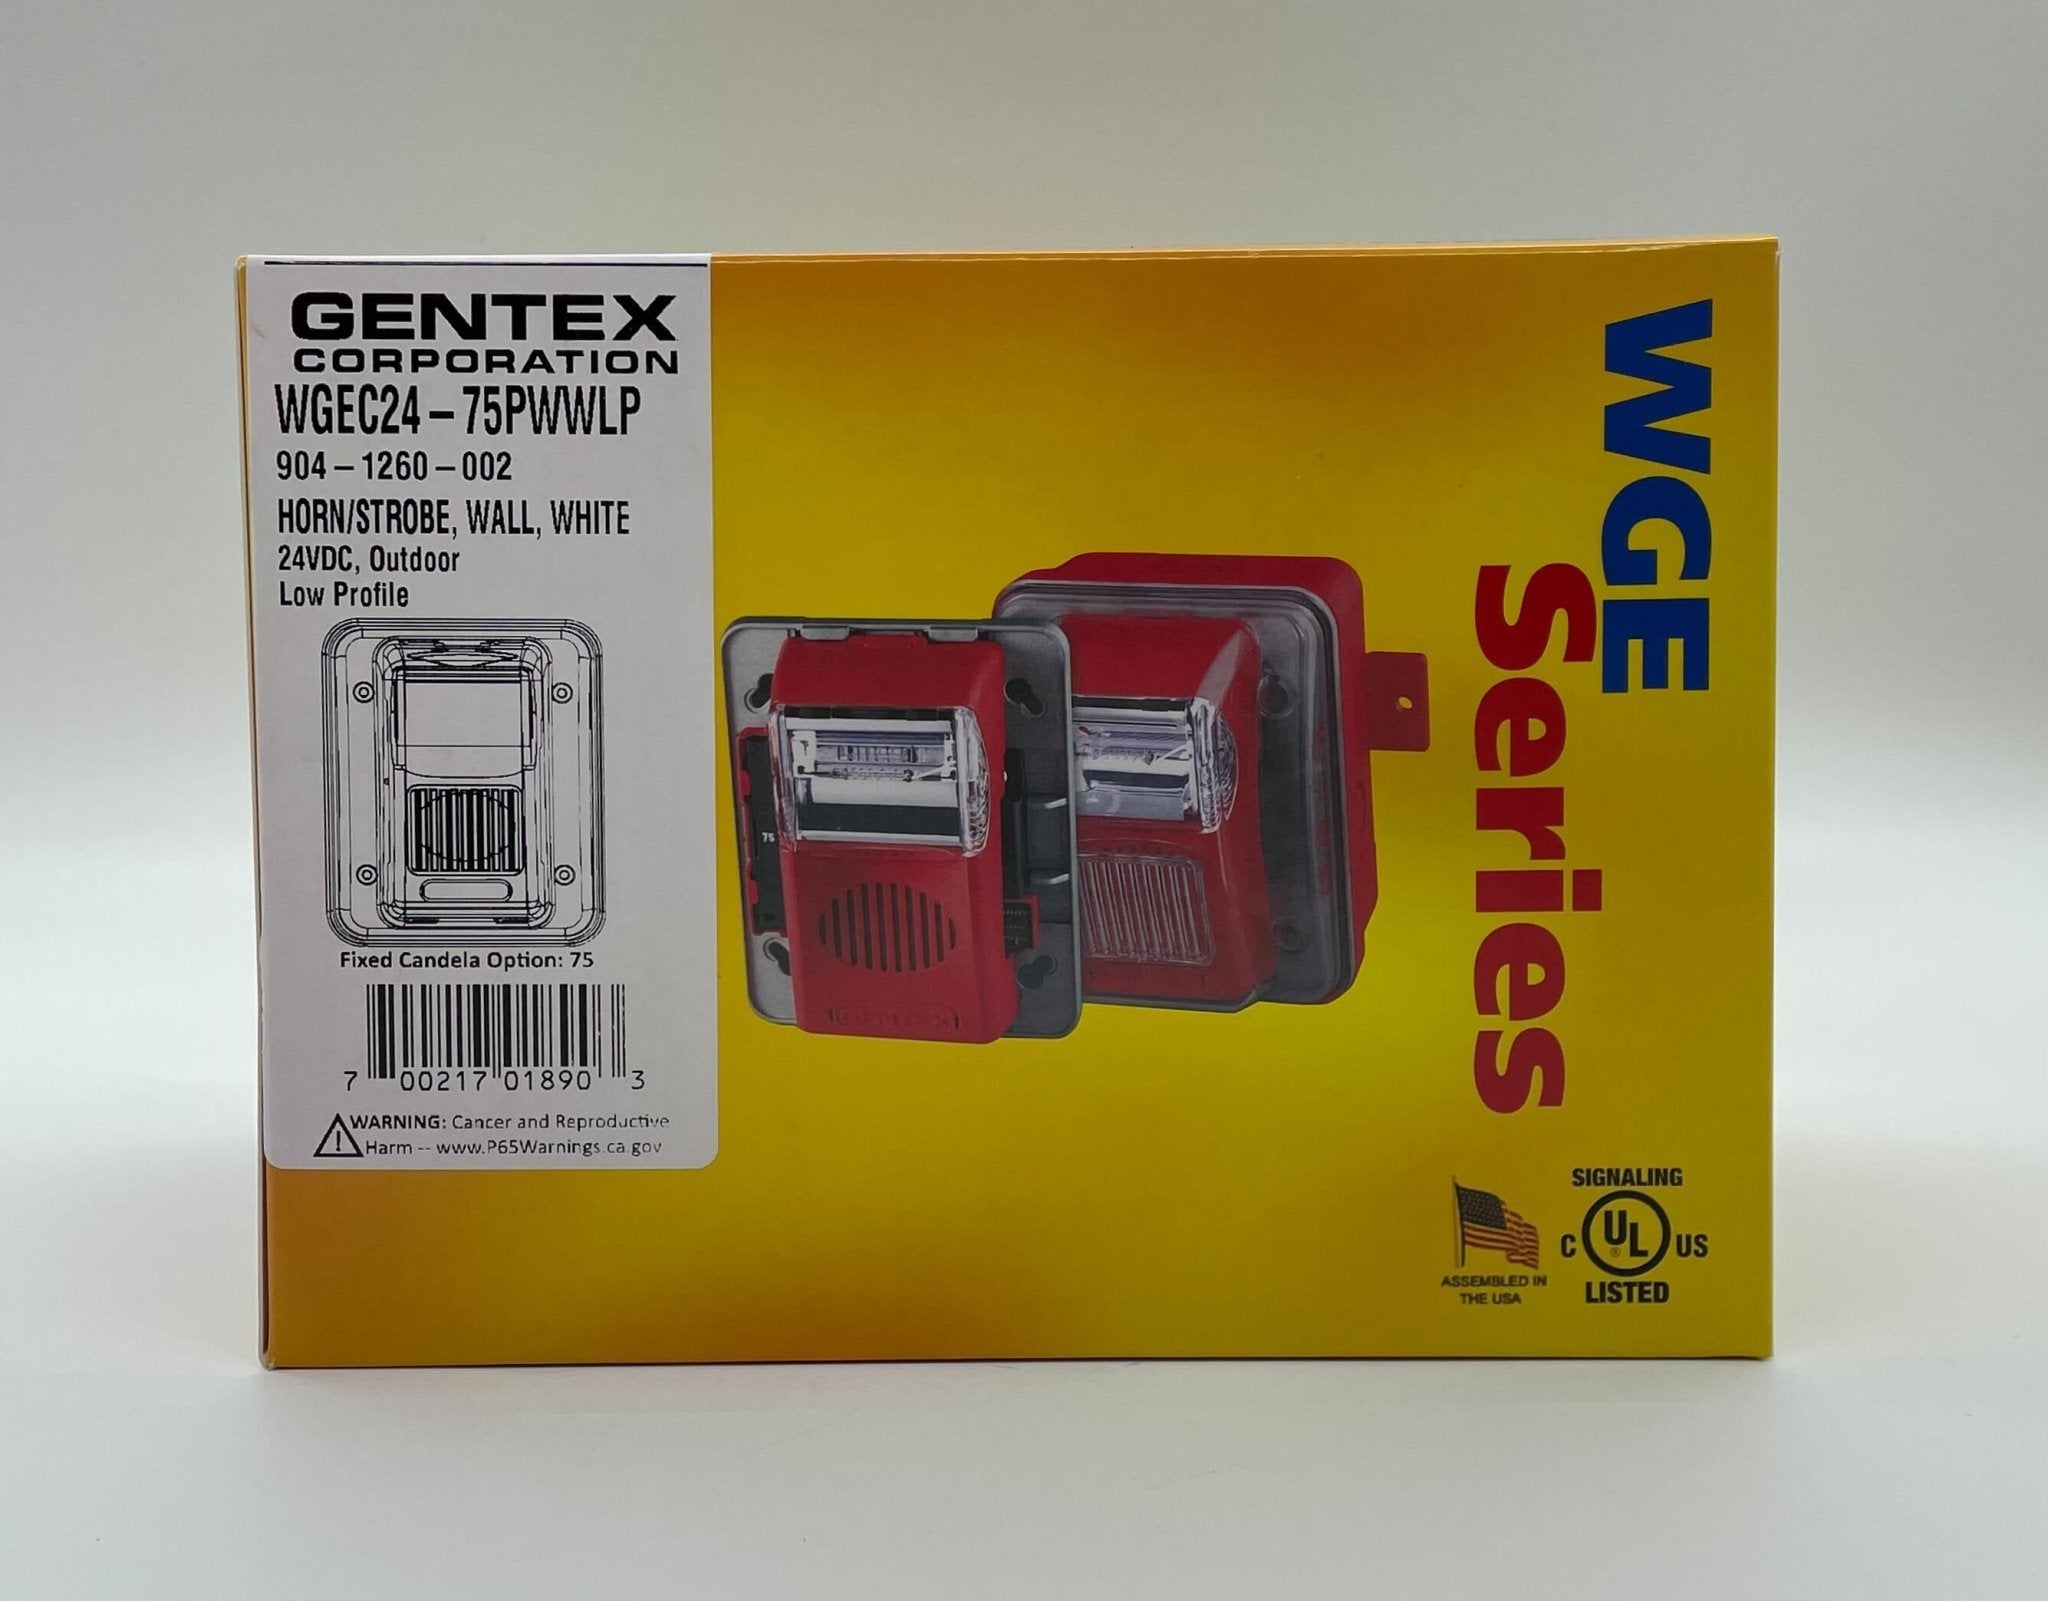 Gentex WGEC24-75PWWLP - The Fire Alarm Supplier